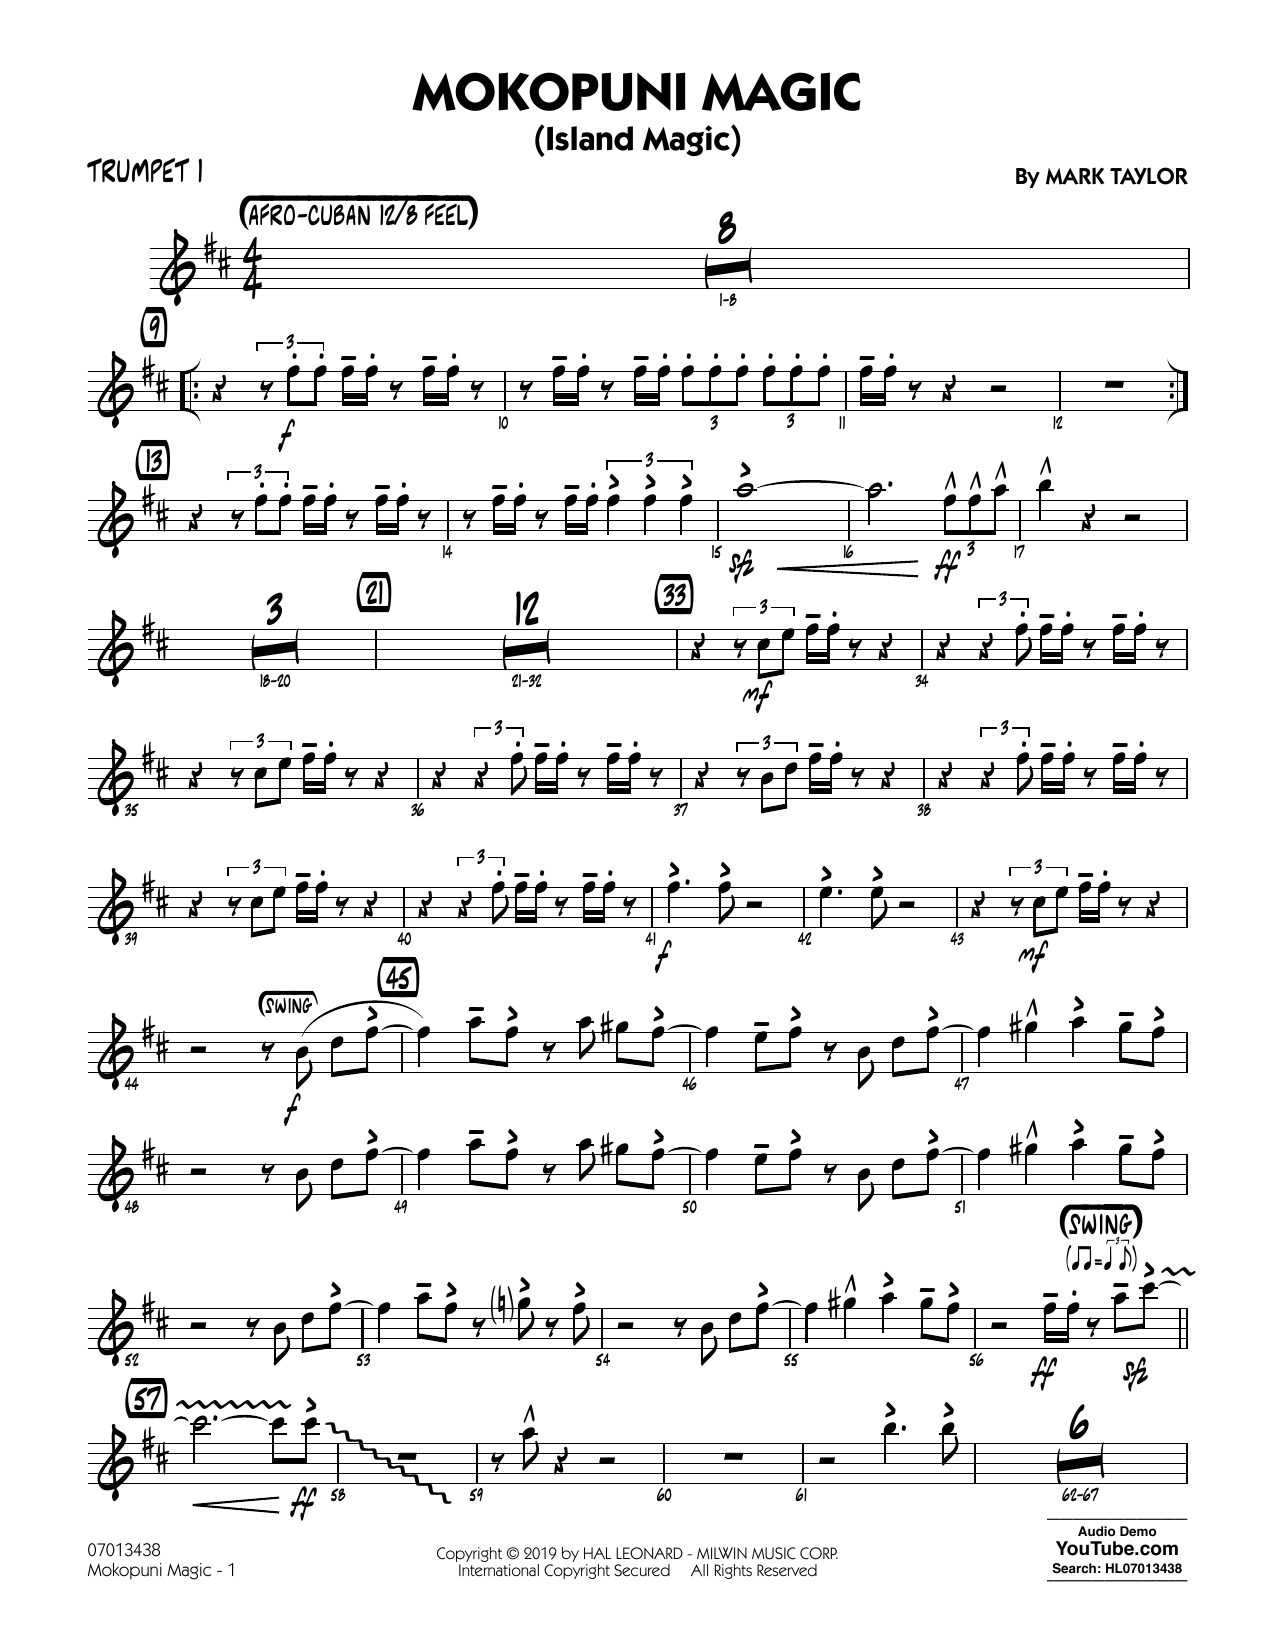 Mark Taylor Mokopuni Magic (Island Magic) - Trumpet 1 Sheet Music Notes & Chords for Jazz Ensemble - Download or Print PDF